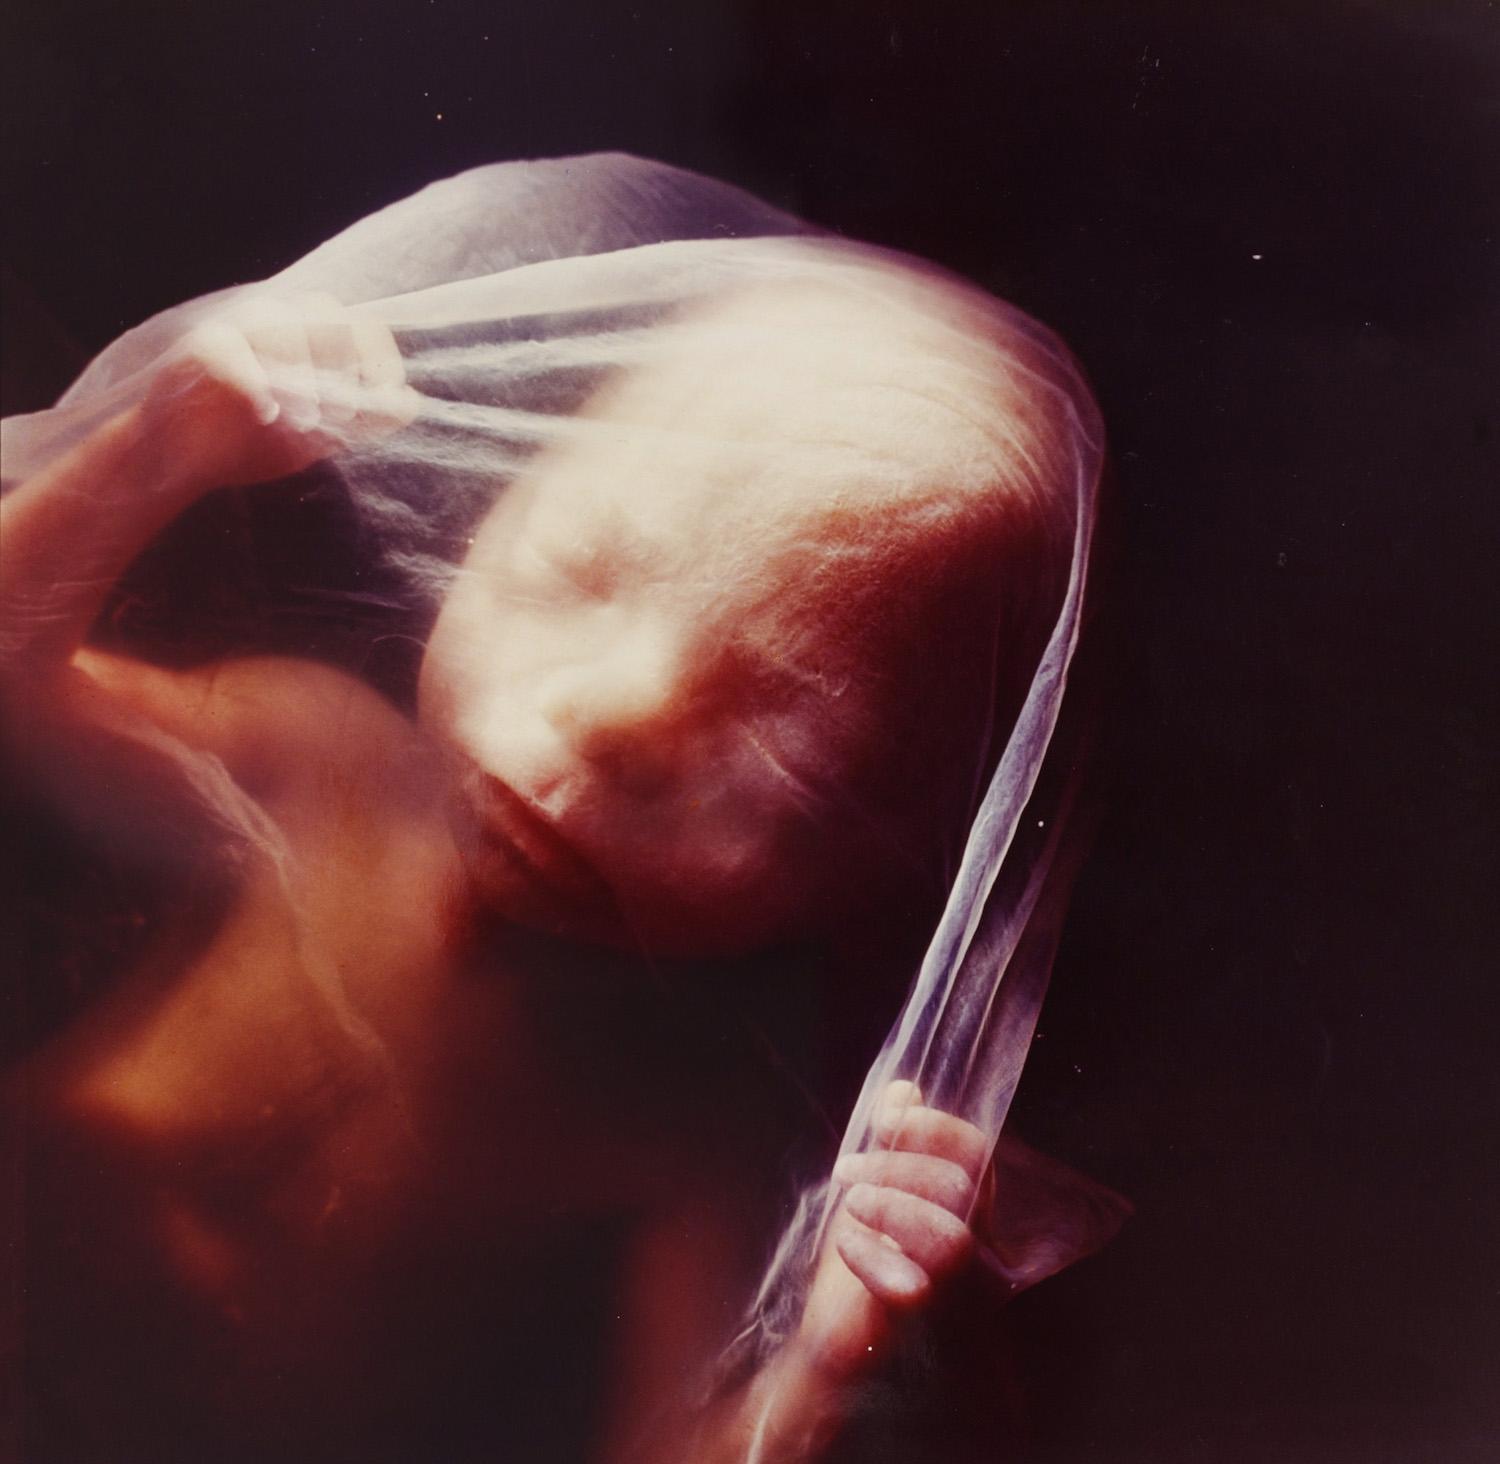 Малыш на 23 неделе. Эмбрион Леннарт Нильсон. Эмбрион 18 недель Леннарт Нильссон. "Зародыш, 18 недель", Леннарт Нильсон, 1965..